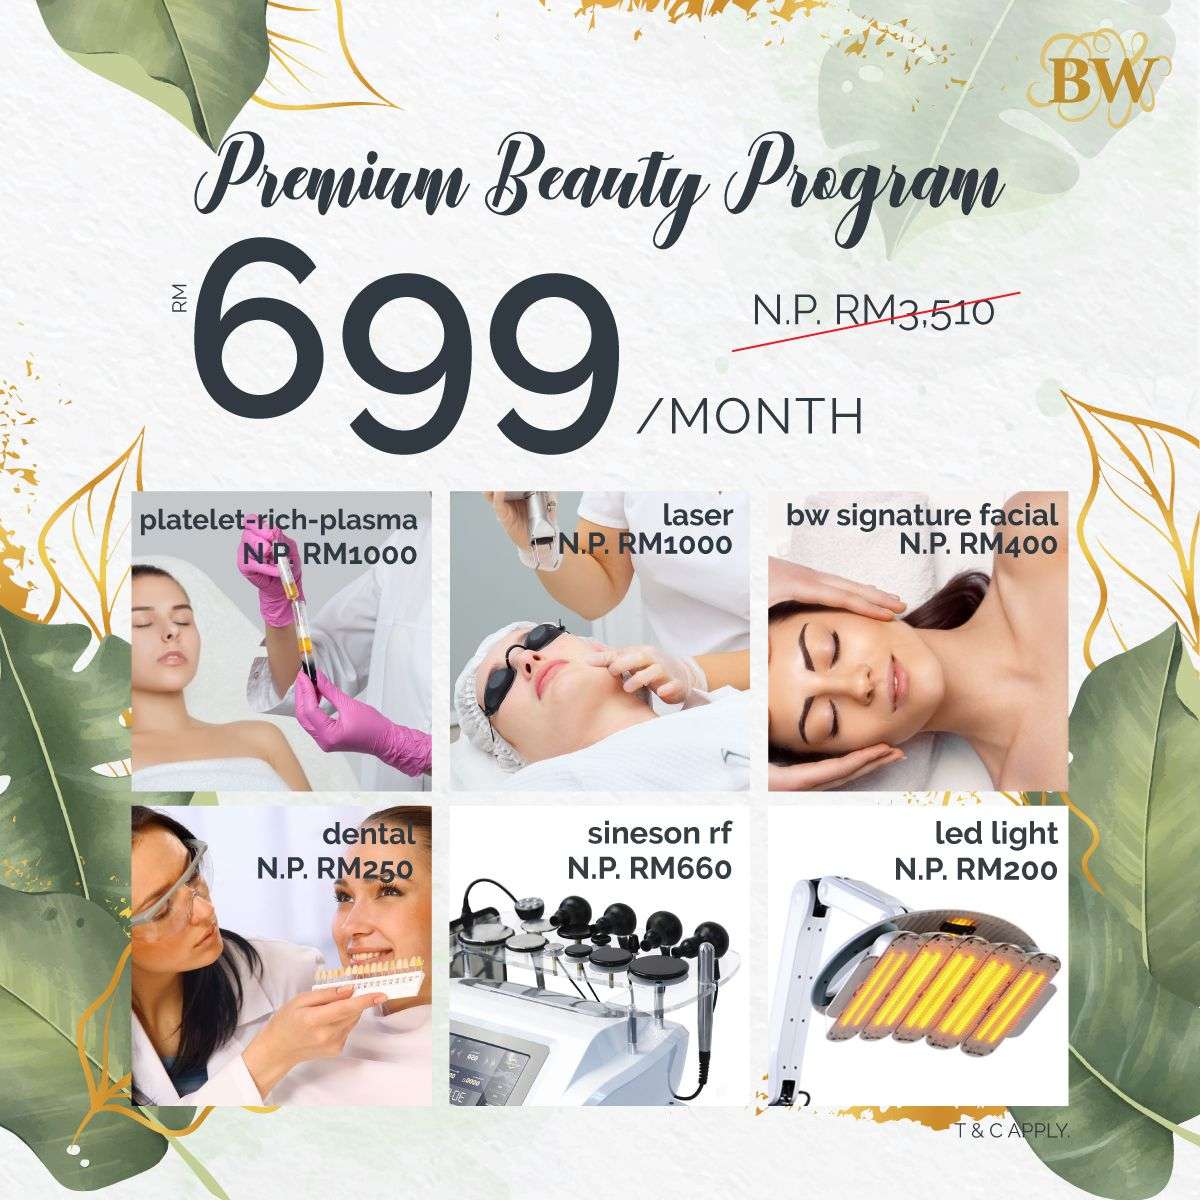 Beverly Premium Beauty Program v2.0